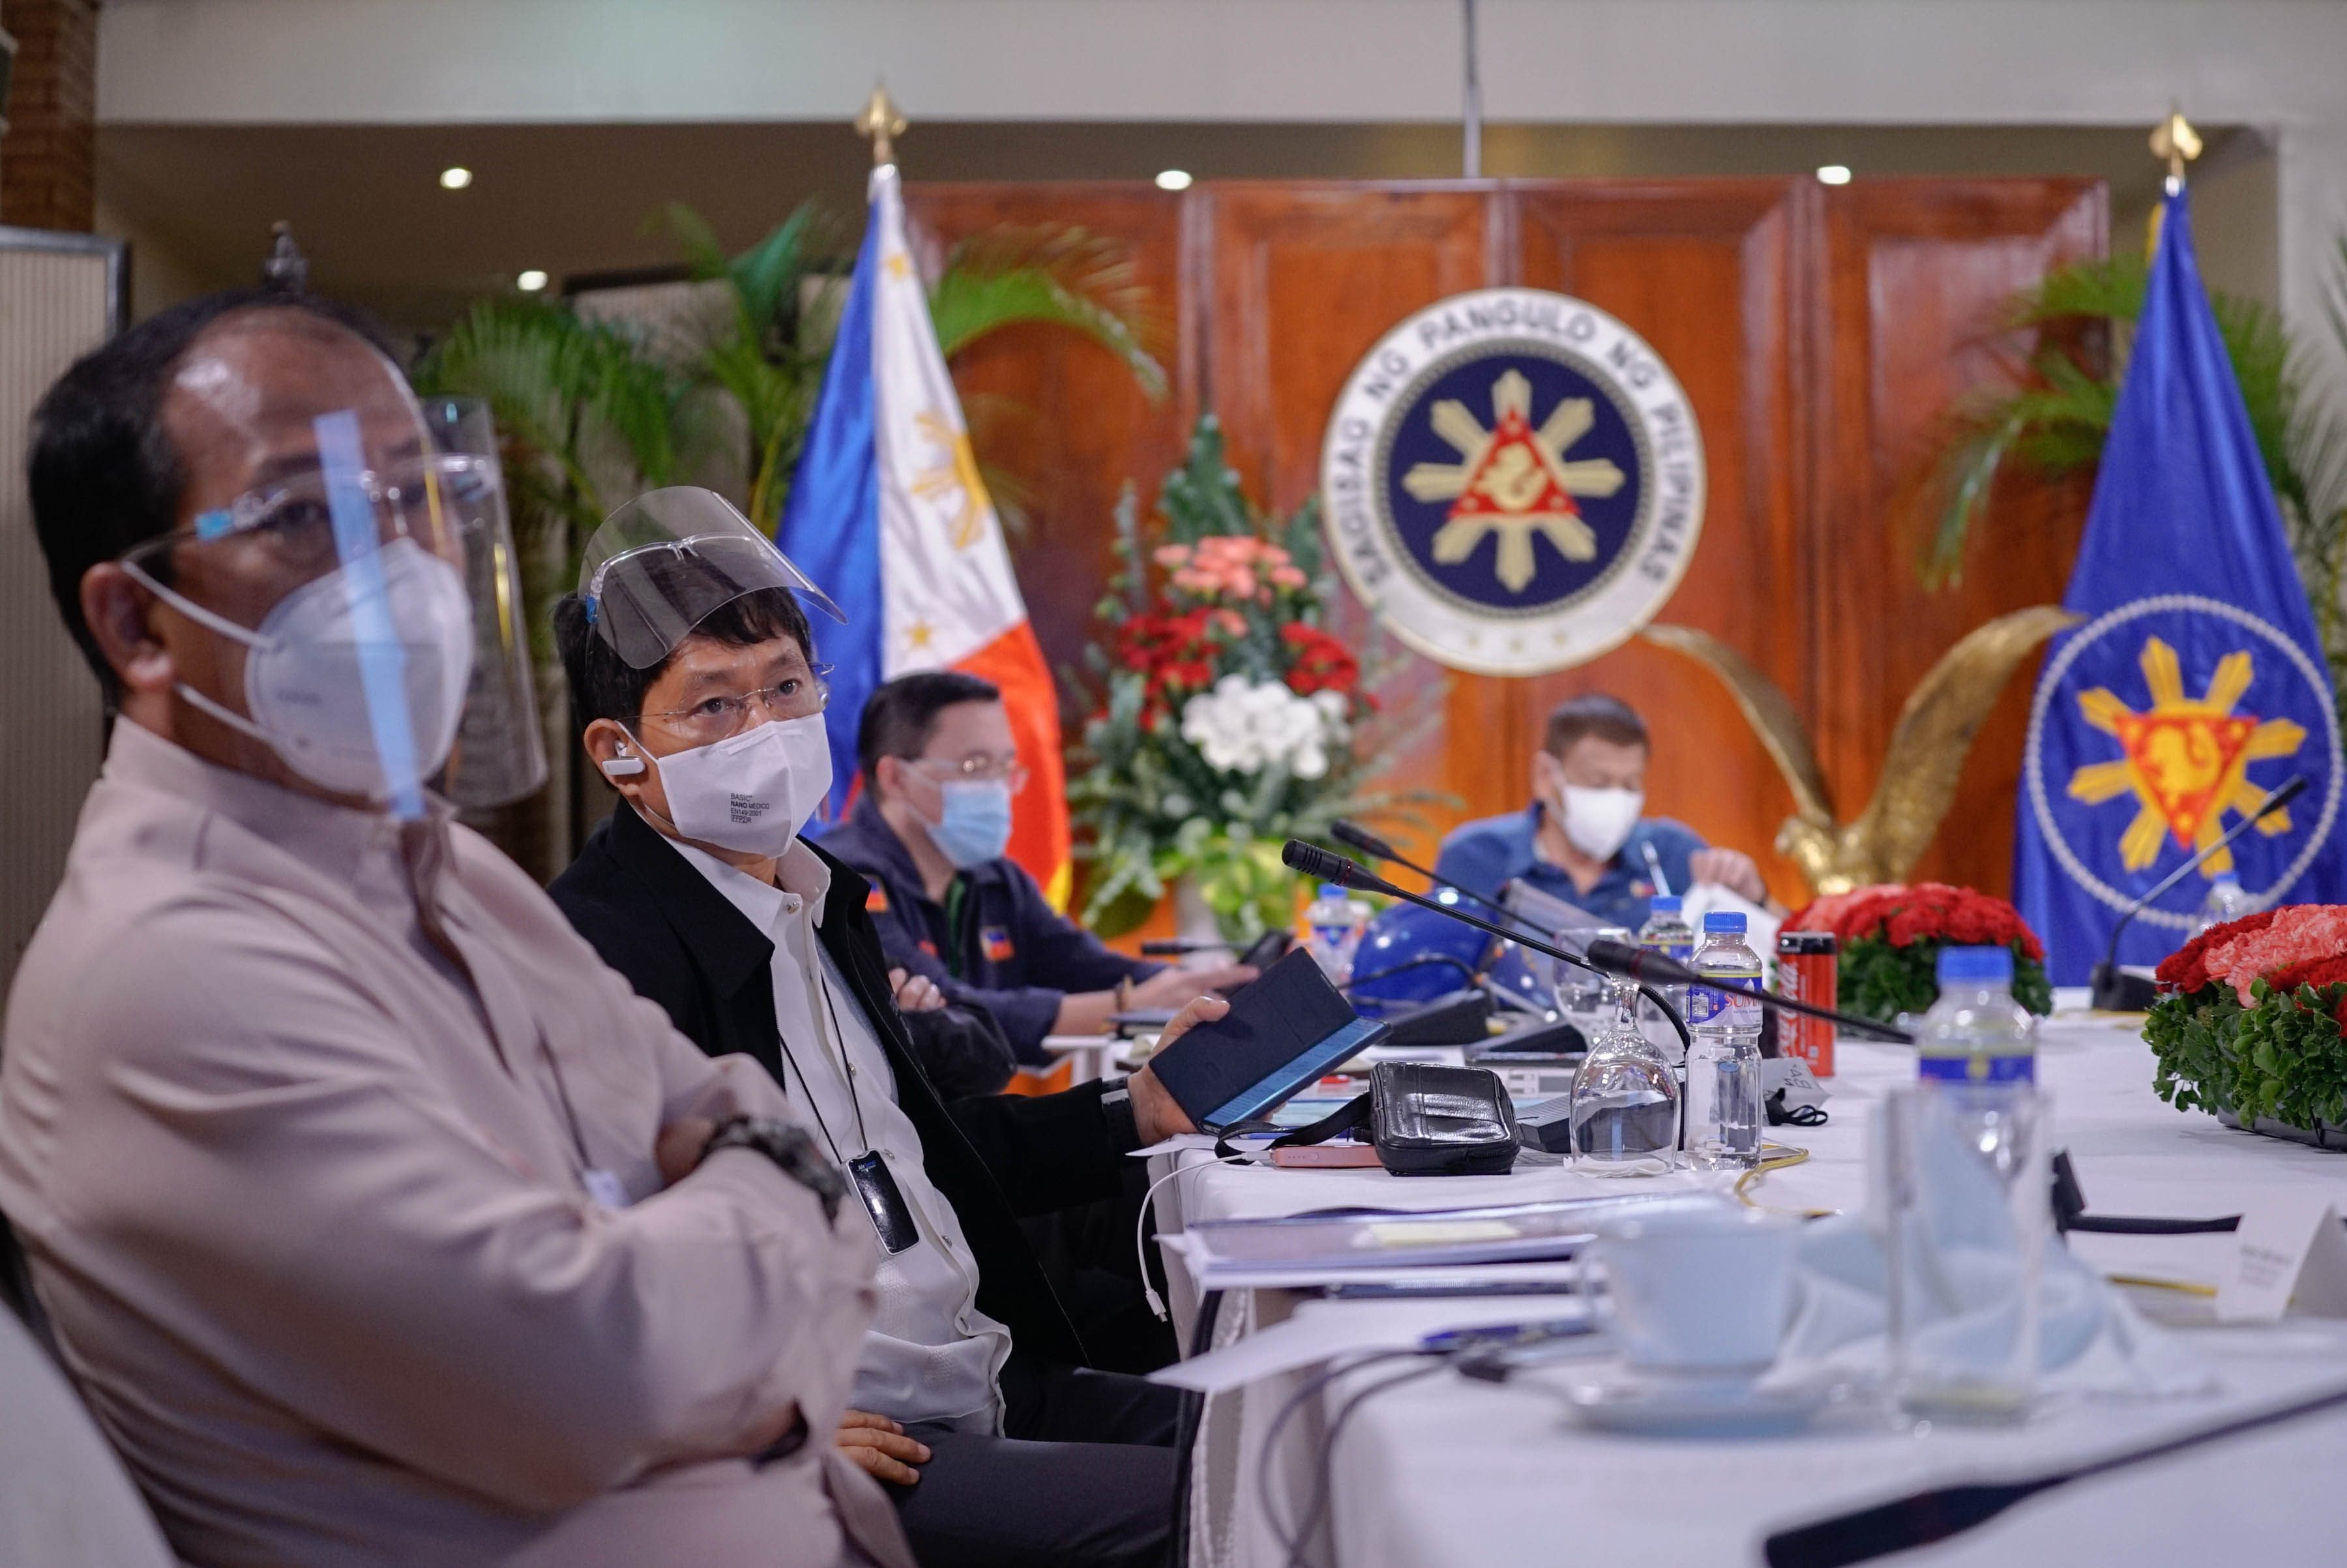 ‘Big brother, big sister’ Cabinet secretaries won’t take over mayors’ pandemic efforts – Malacañang